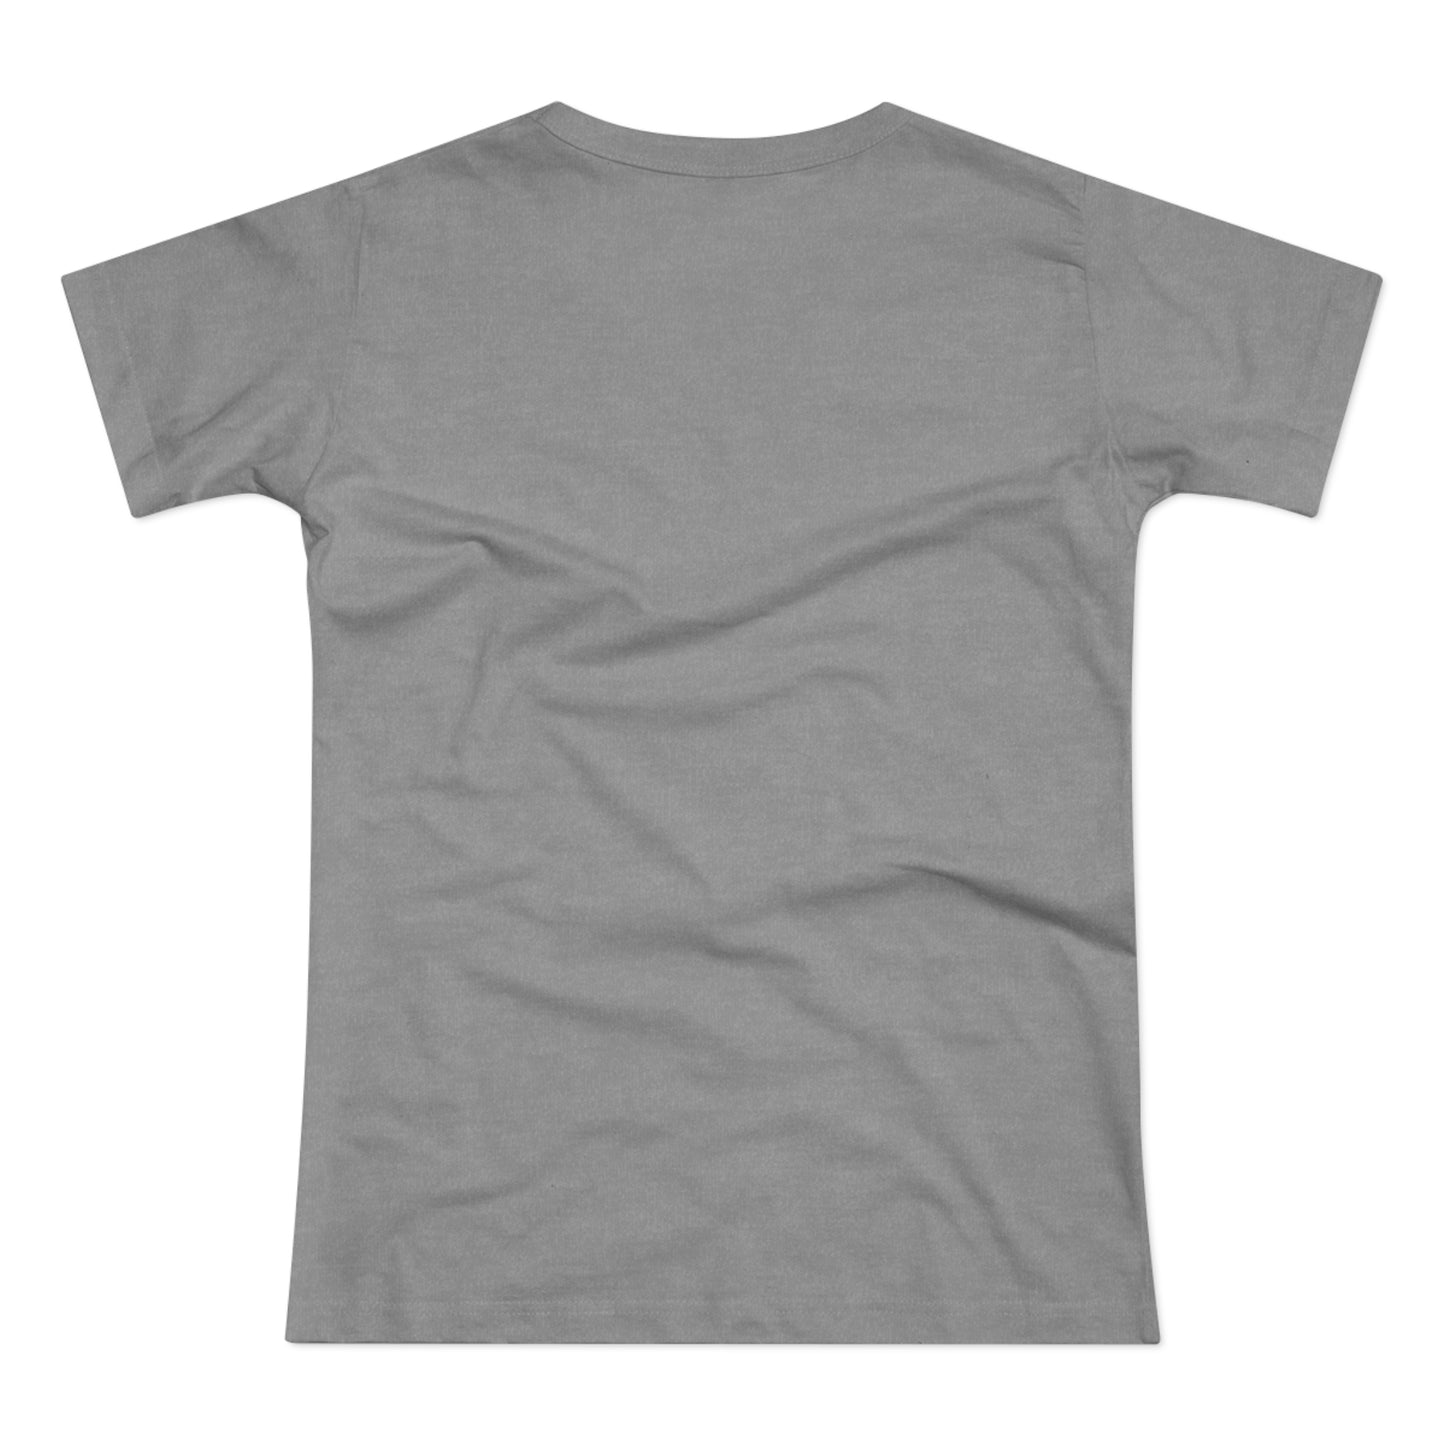 T-skjorte Dame - "Paw-rent"